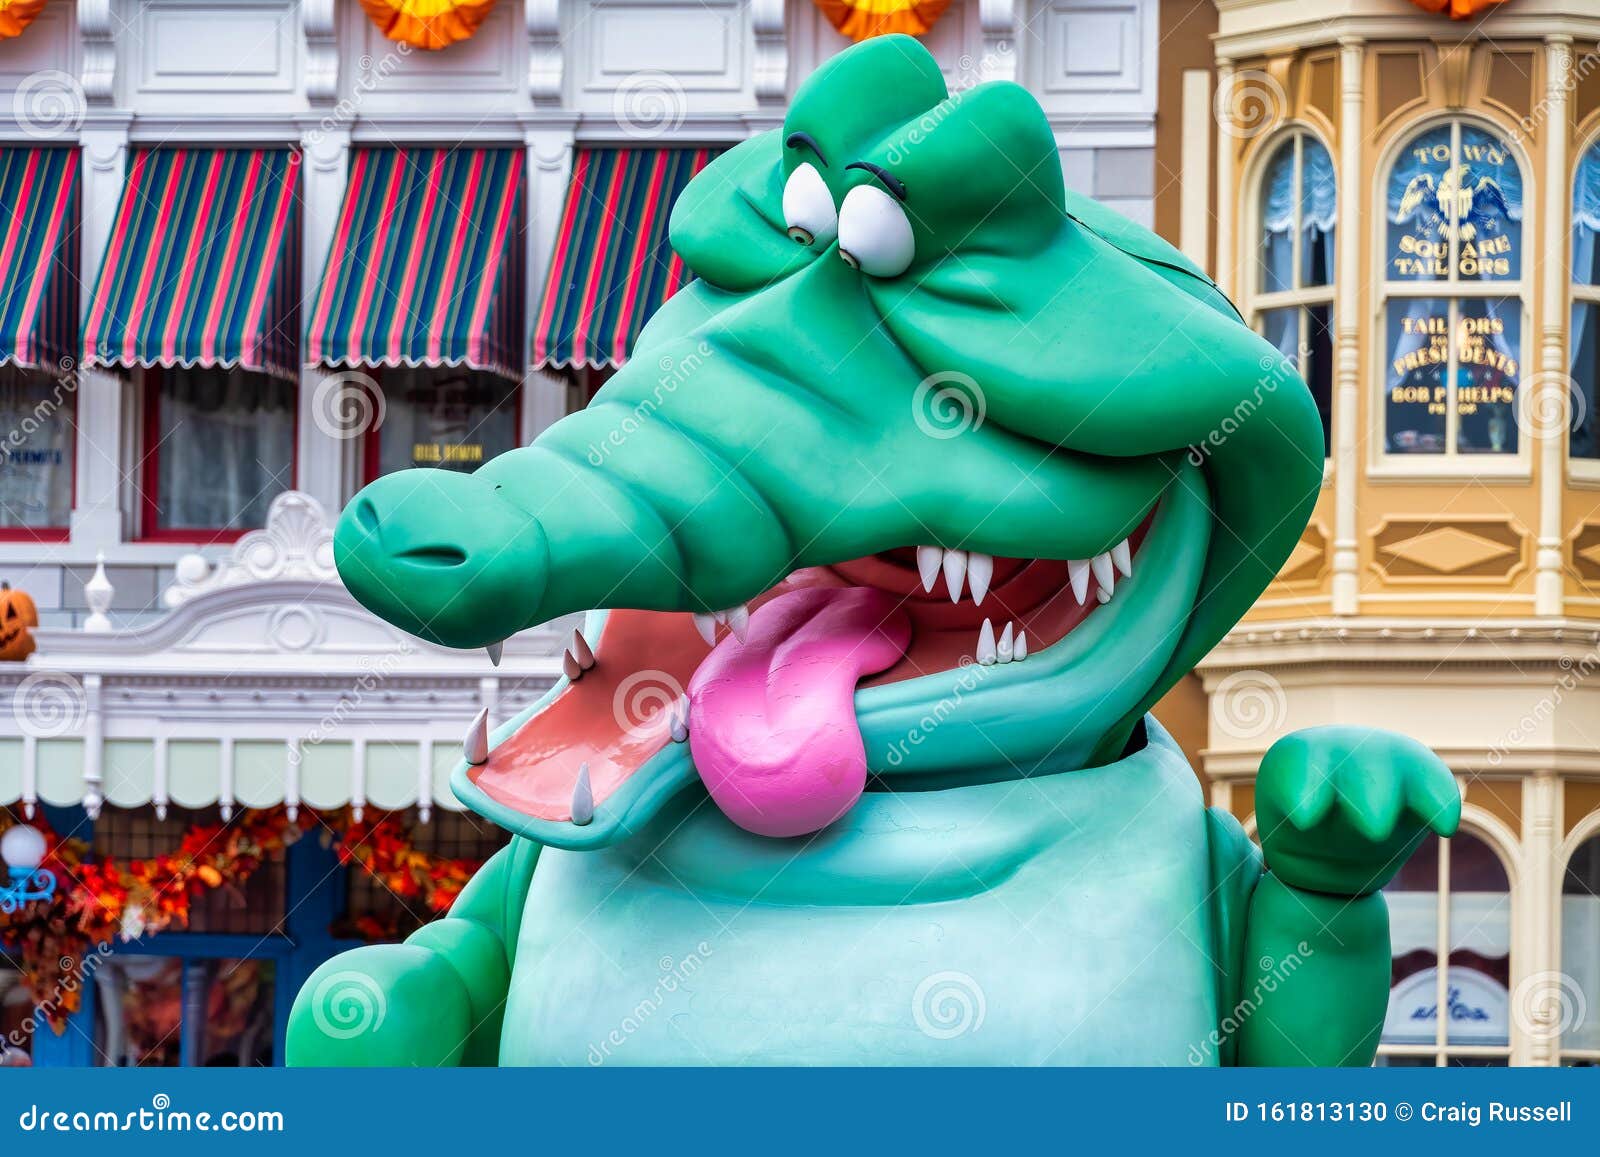 https://thumbs.dreamstime.com/z/crocodile-float-festival-fantasy-parade-magic-kingdom-161813130.jpg